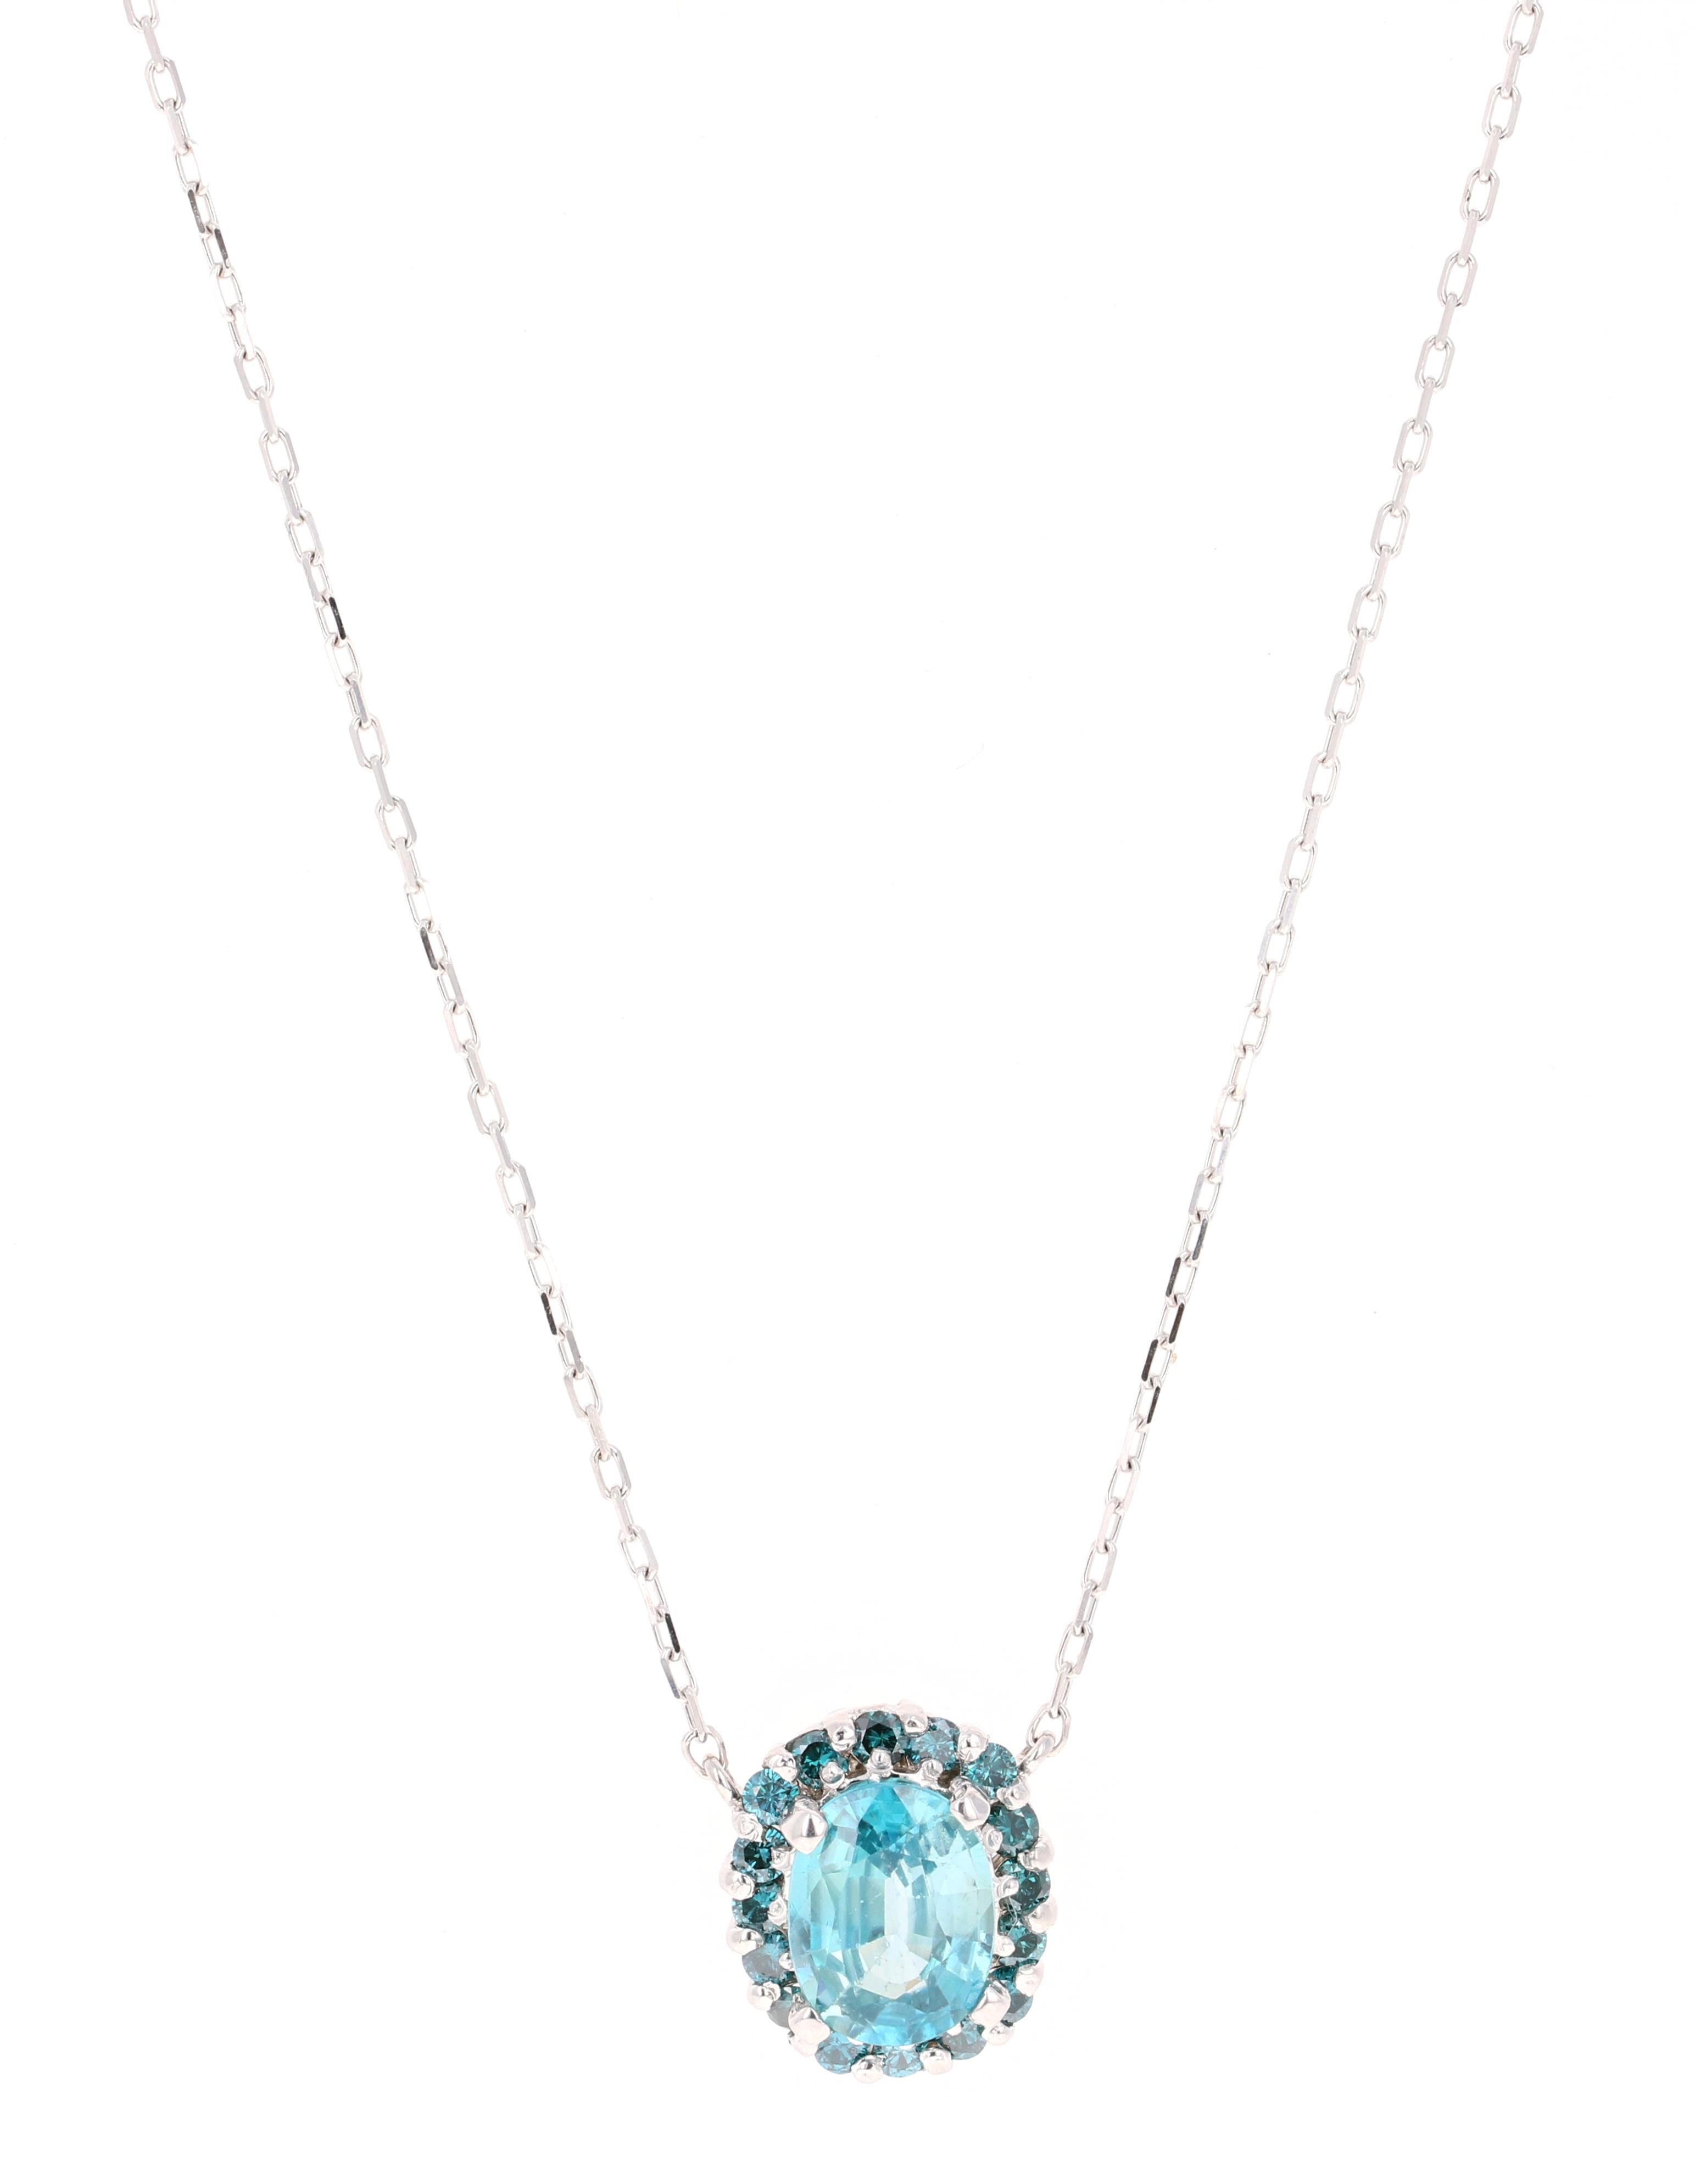 Oval Cut 3.28 Carat Blue Zircon Blue Diamond Chain Necklace 14 Karat White Gold